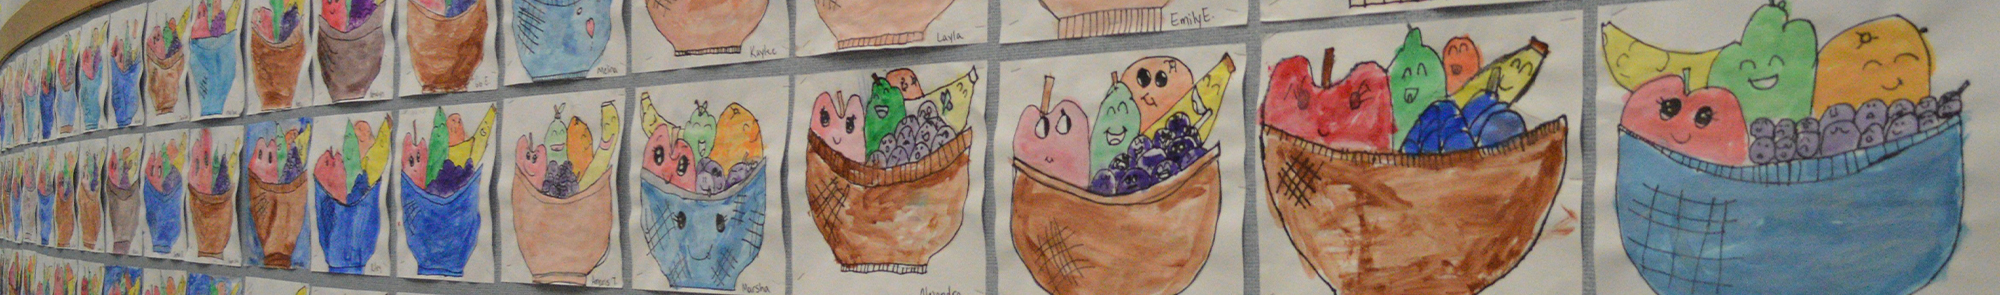 multiple student fruit basket artwork pieces displayed on the bulletin board